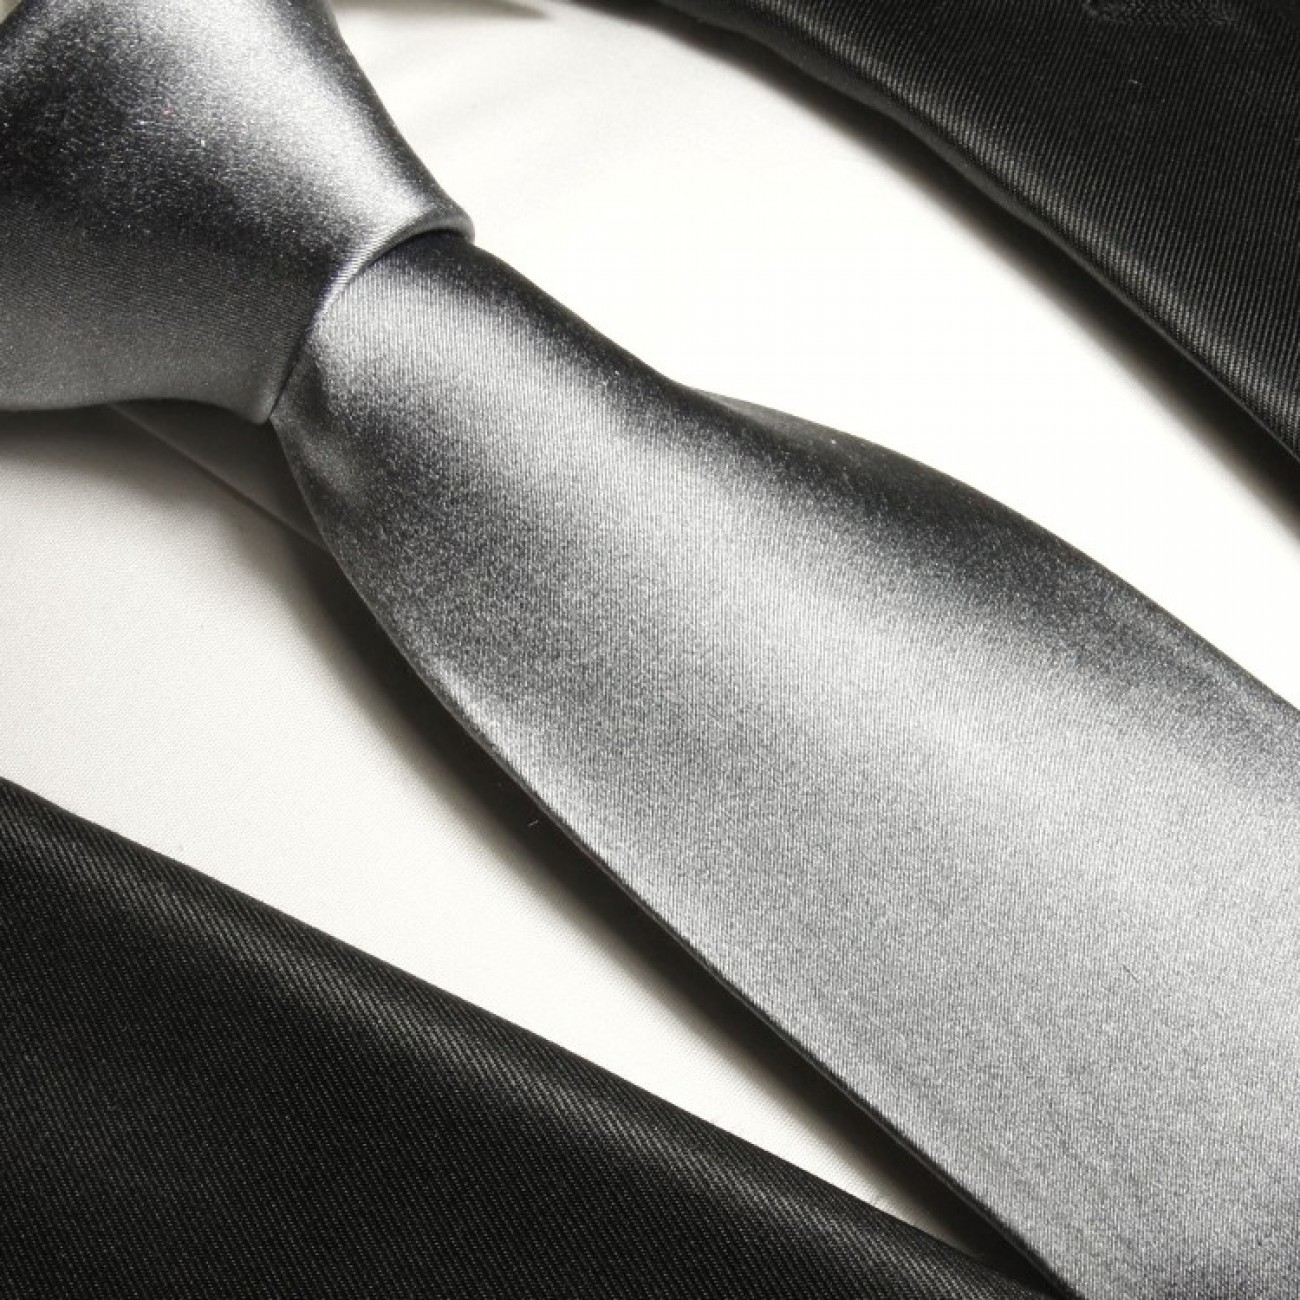 Krawatte silber grau uni satin | JETZT BESTELLEN - Paul Malone Shop